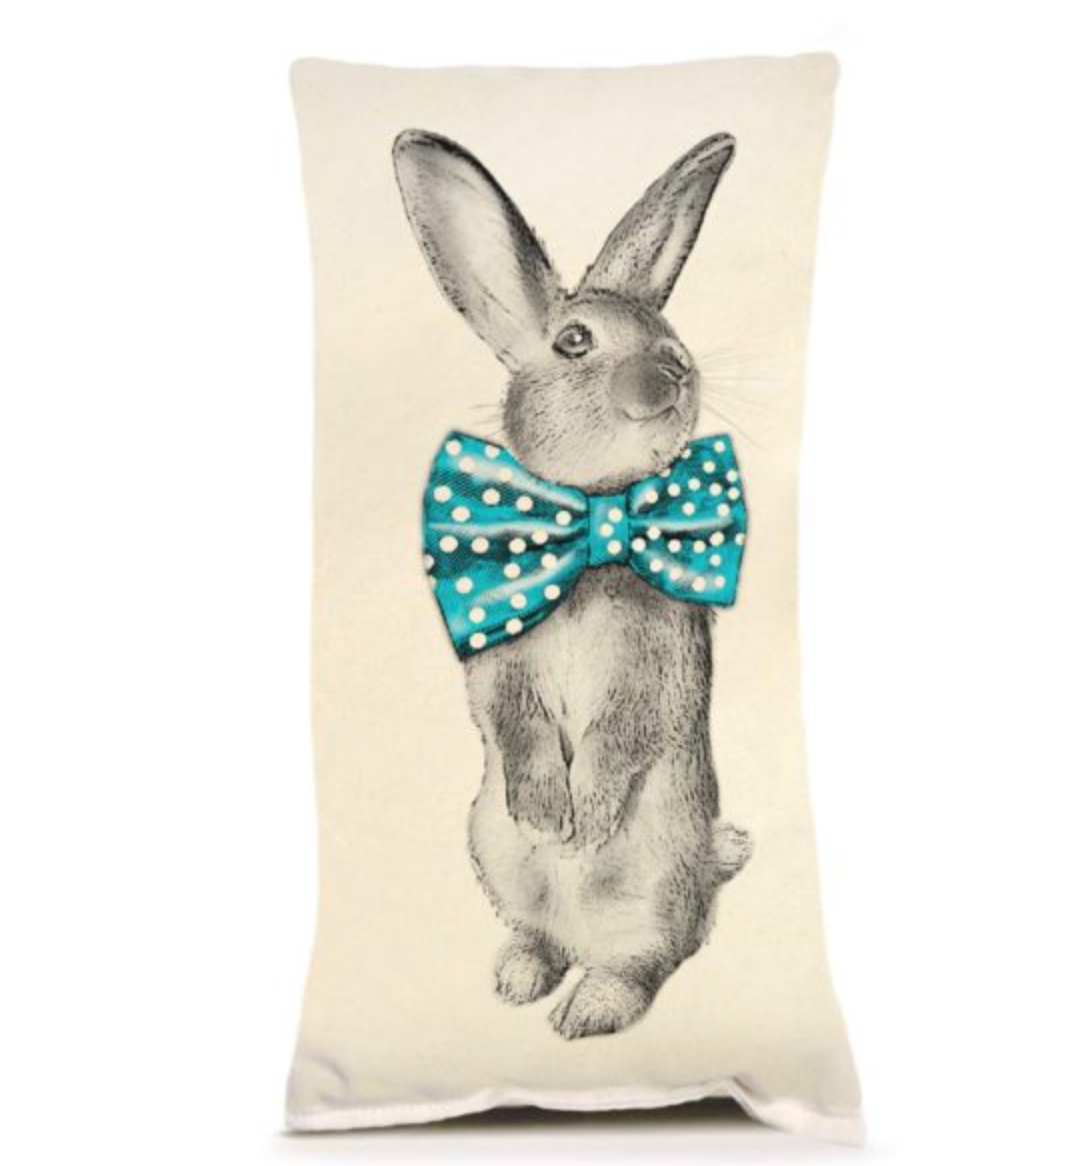 Bunny Bowtie small pillow